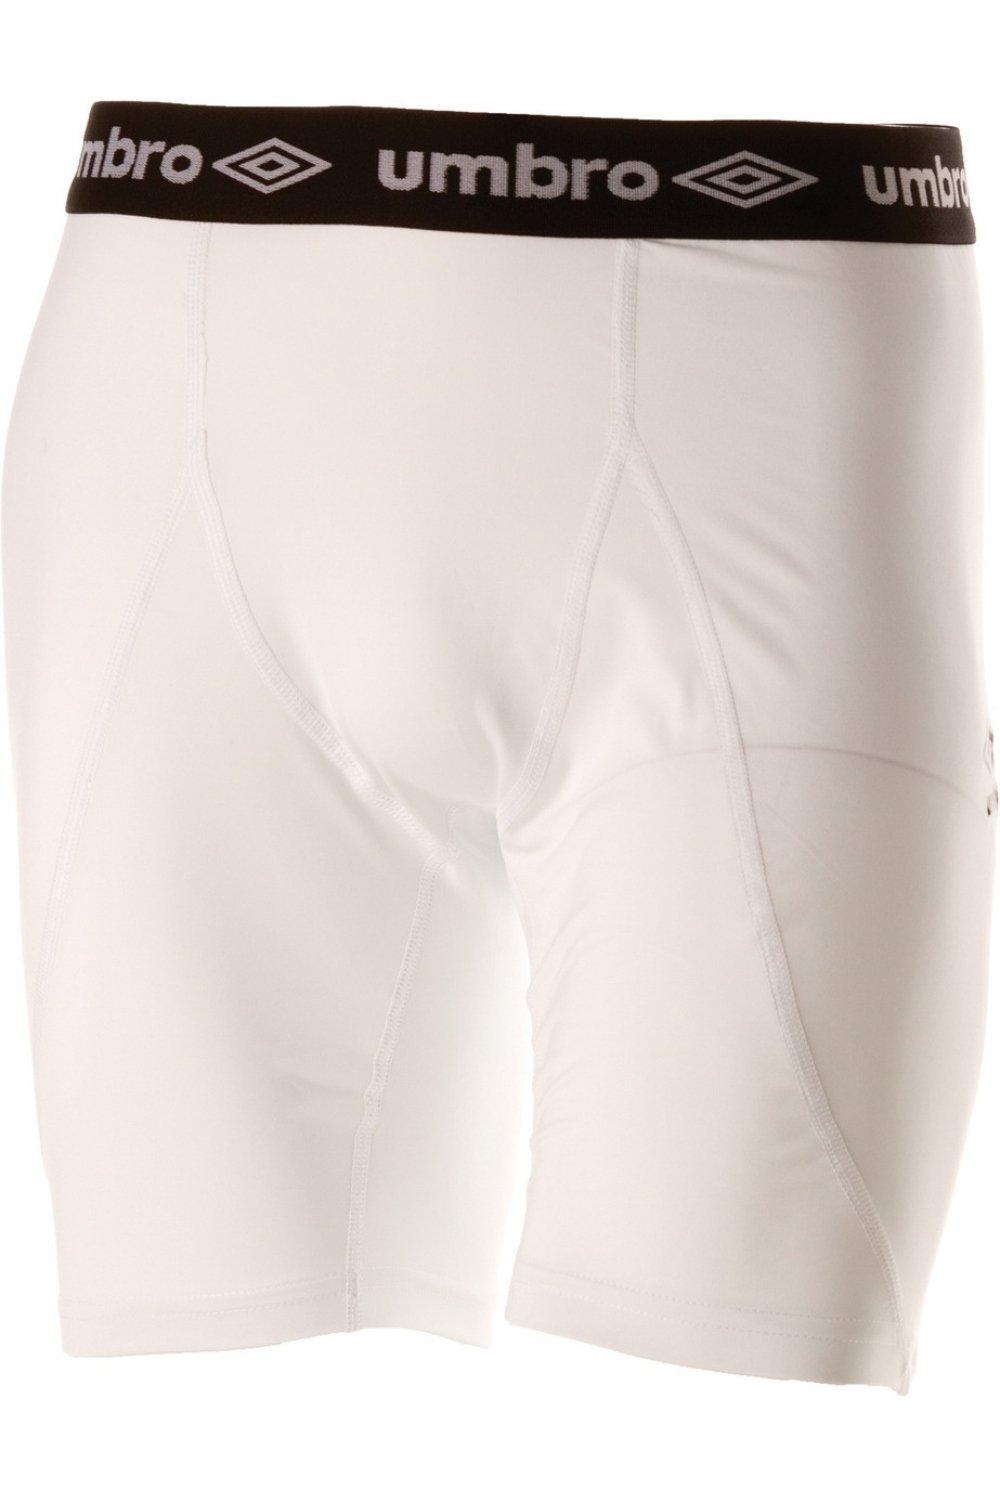 Мужские шорты Core Power Umbro, белый цена и фото